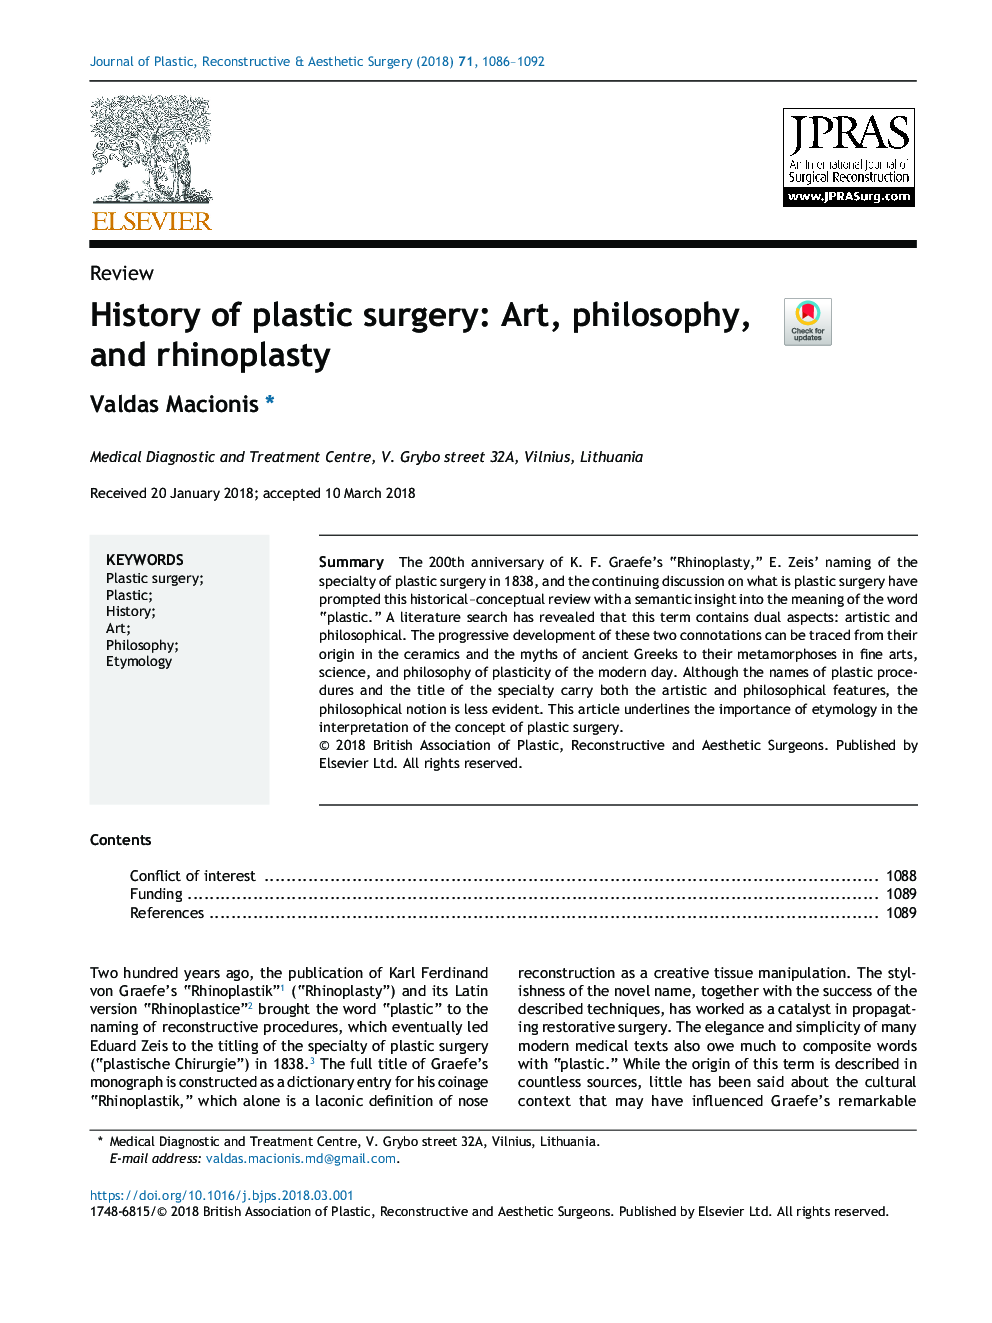 History of plastic surgery: Art, philosophy, and rhinoplasty